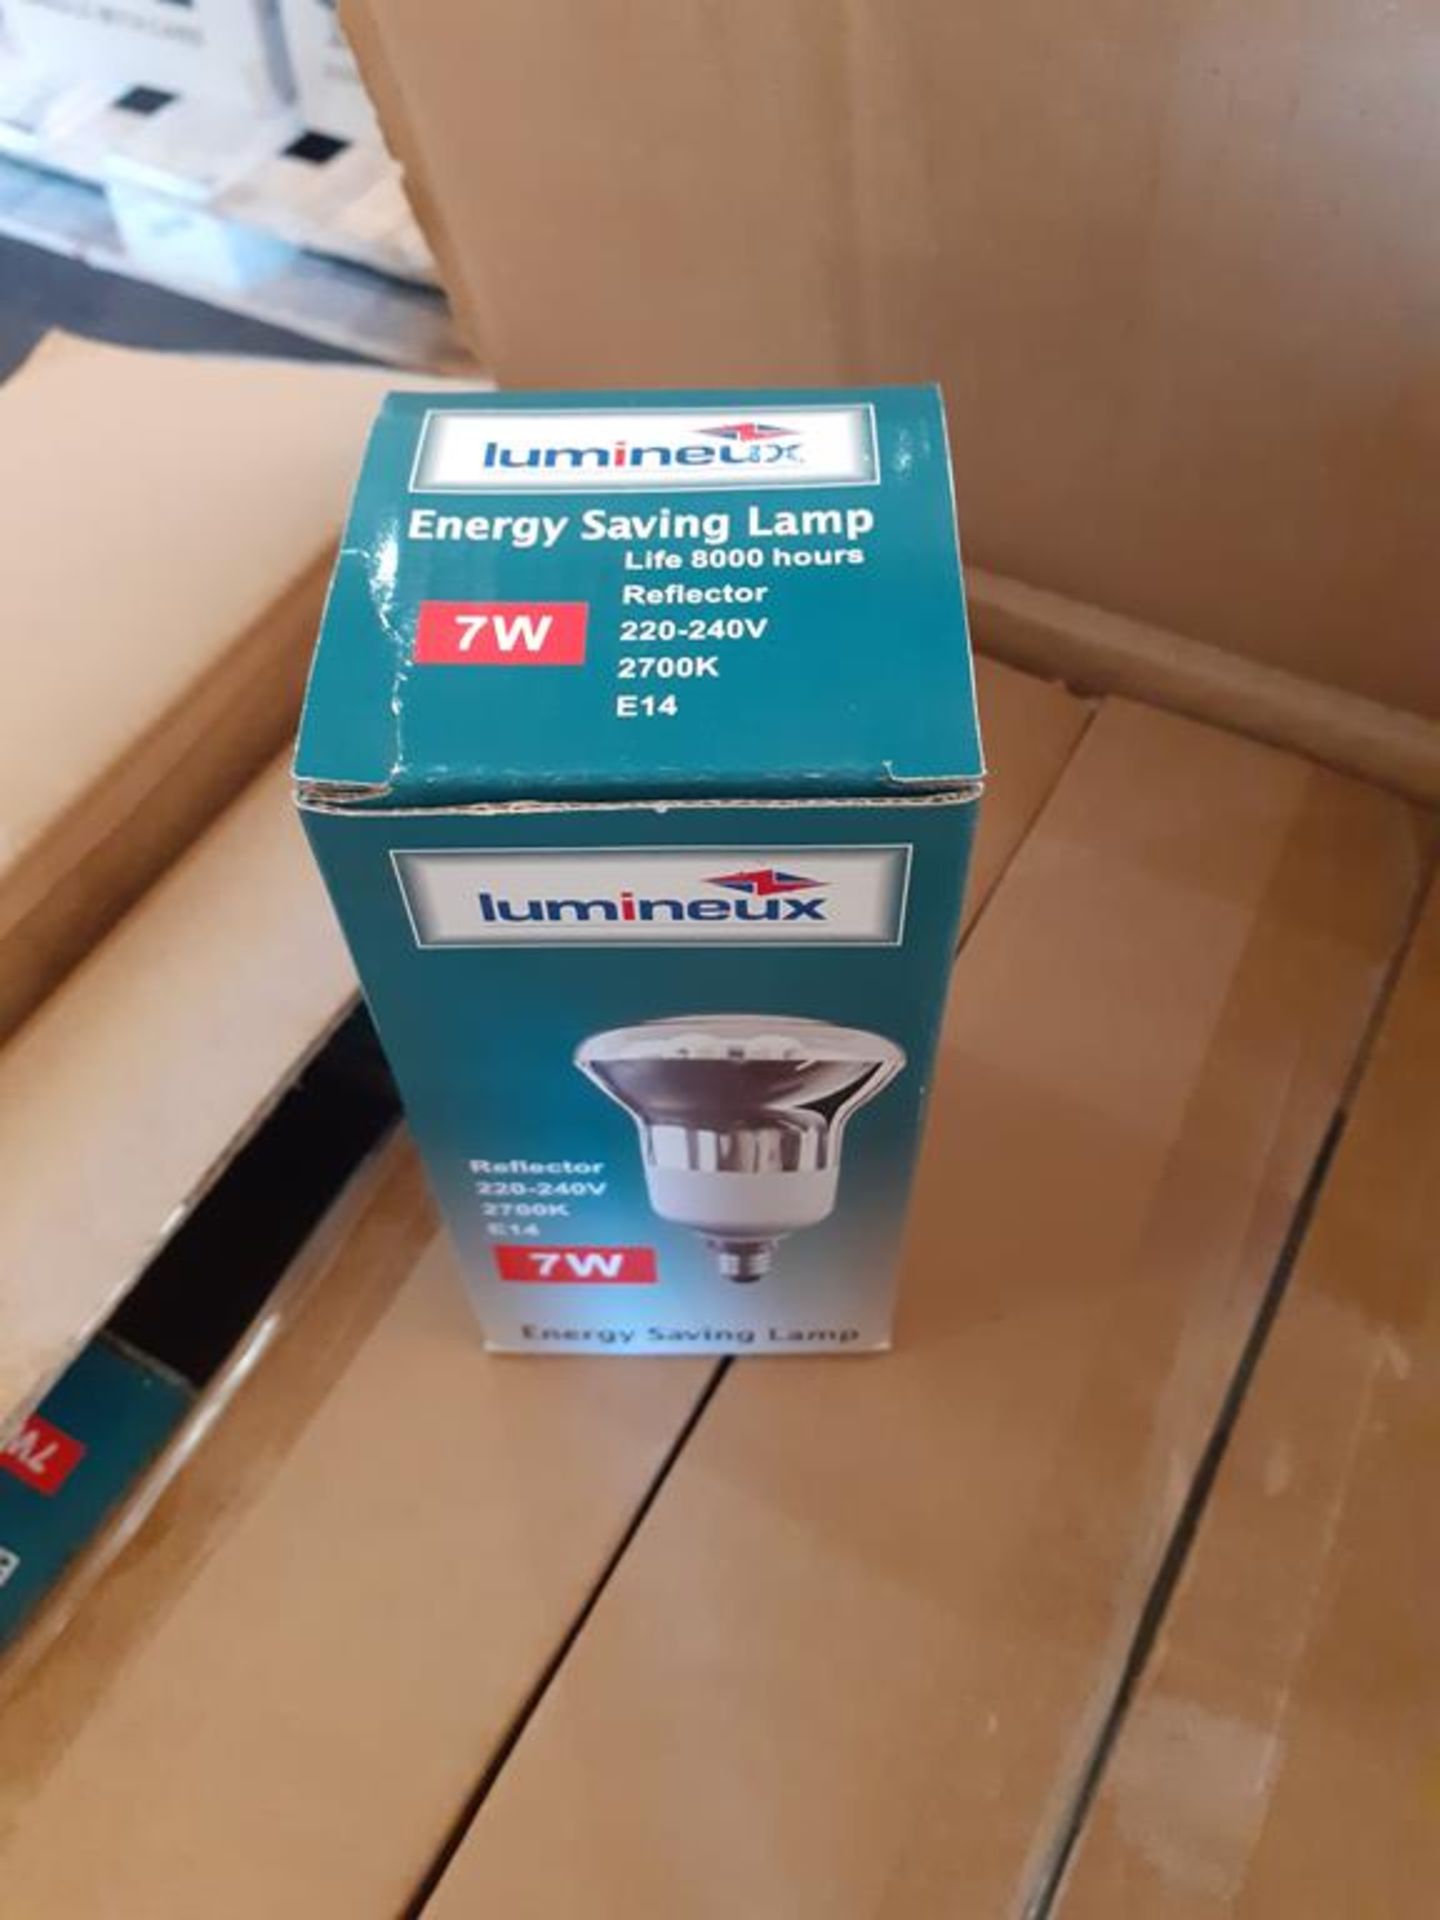 3x boxes of Lumineux Reflector 7W E14 2700K 220-240V Energy Saving Light Bulbs (40pcs per box) - Image 3 of 4